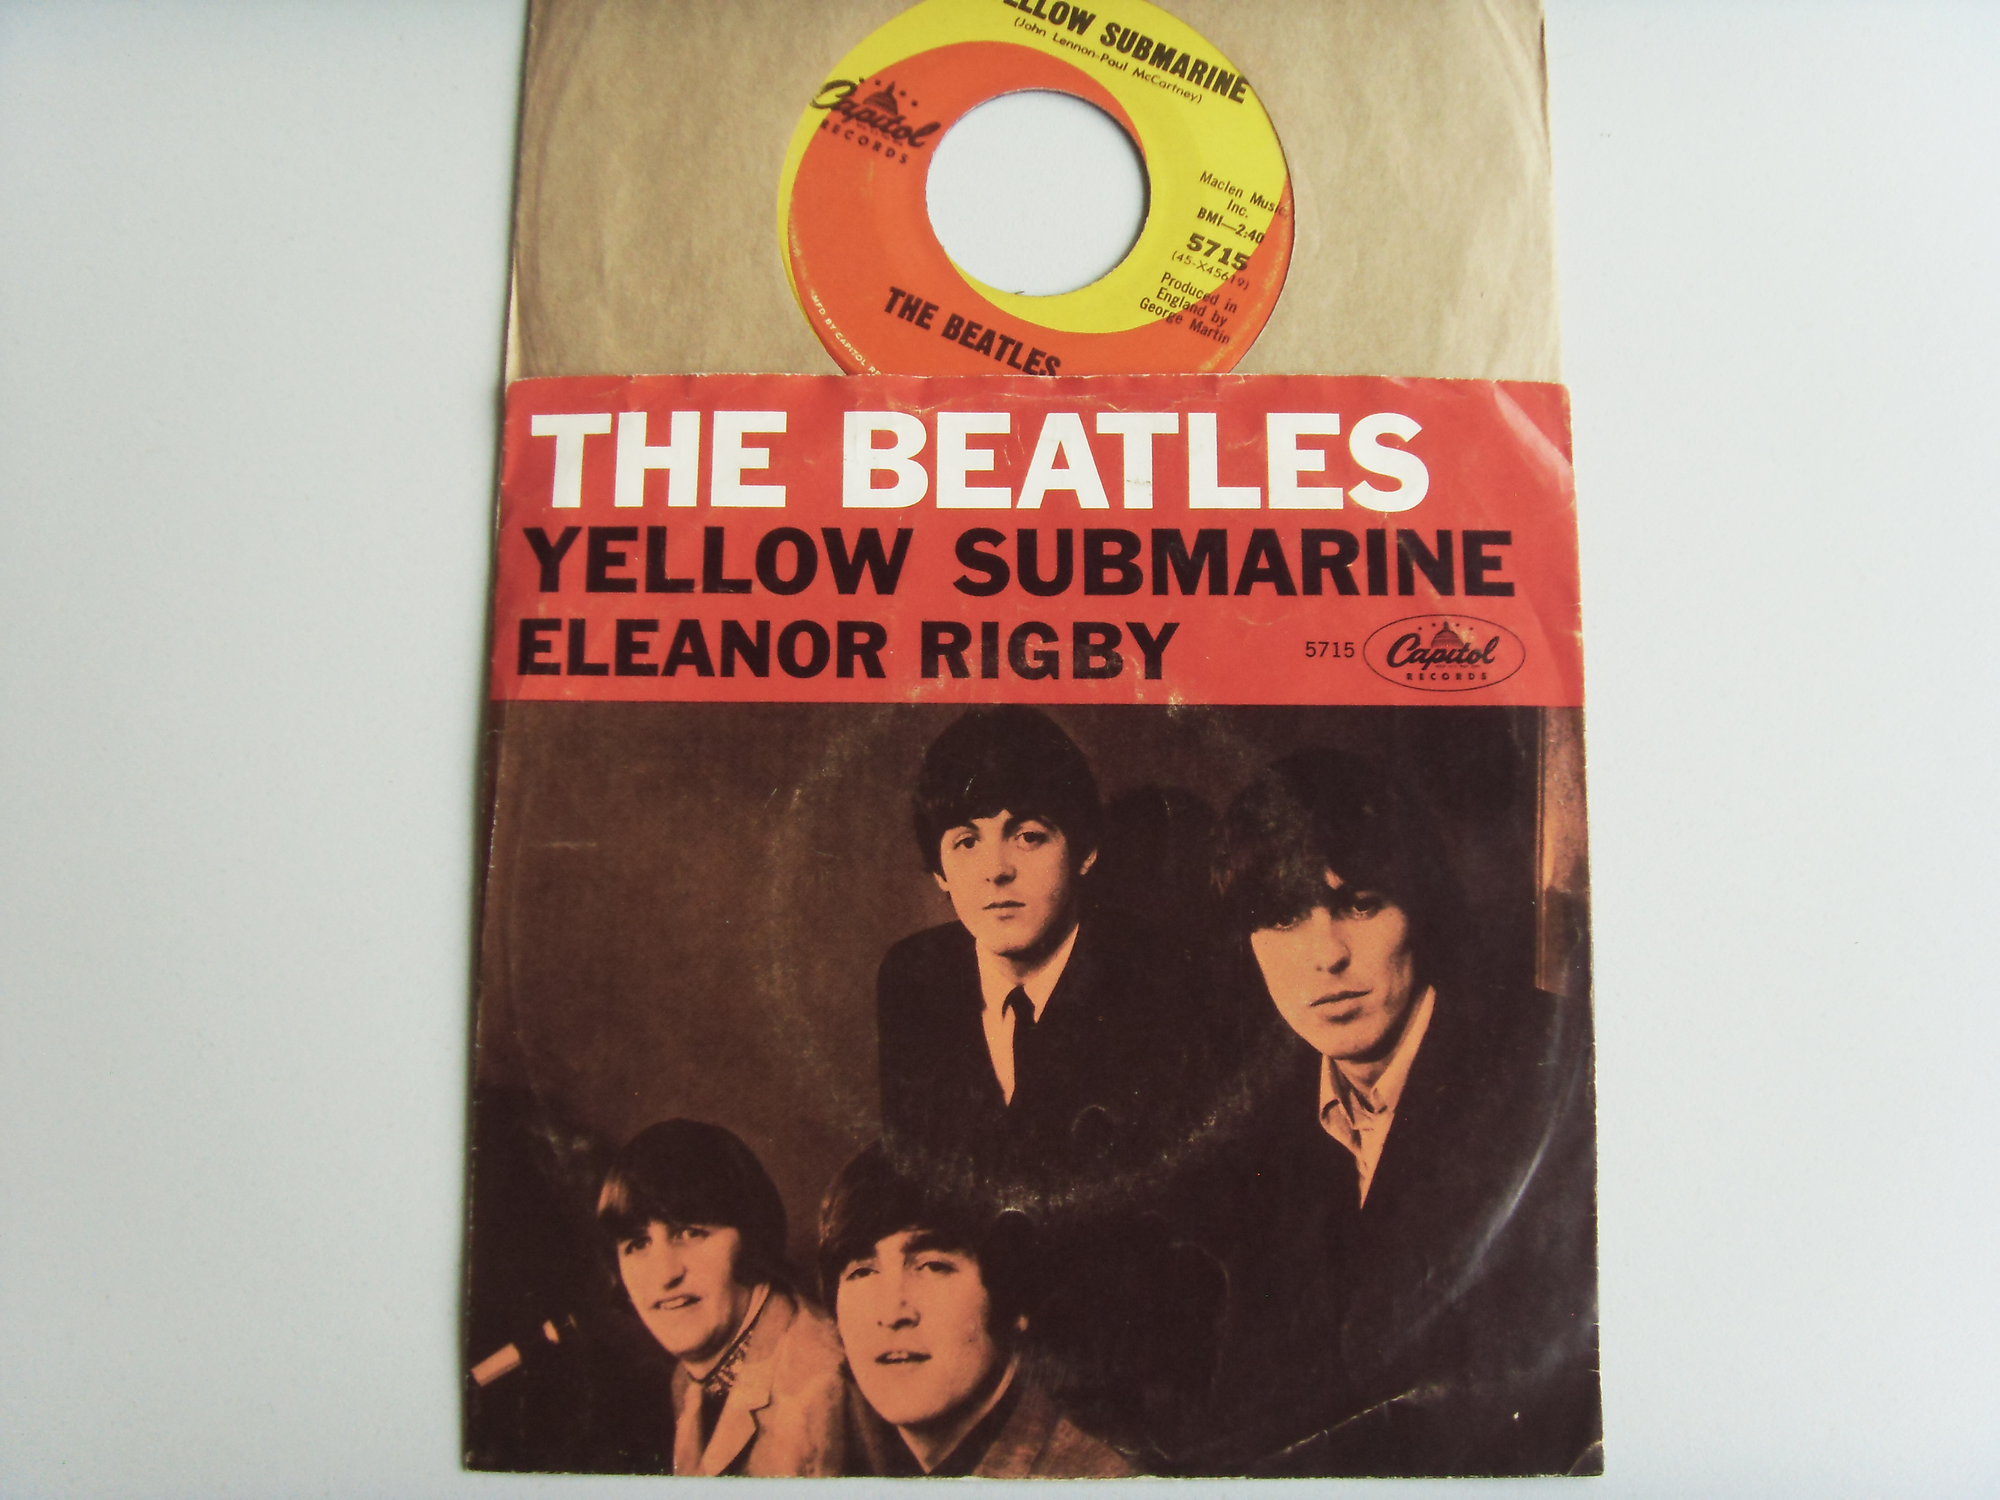 THE BEATLES Yellow Submarine / Eleanor Rigby